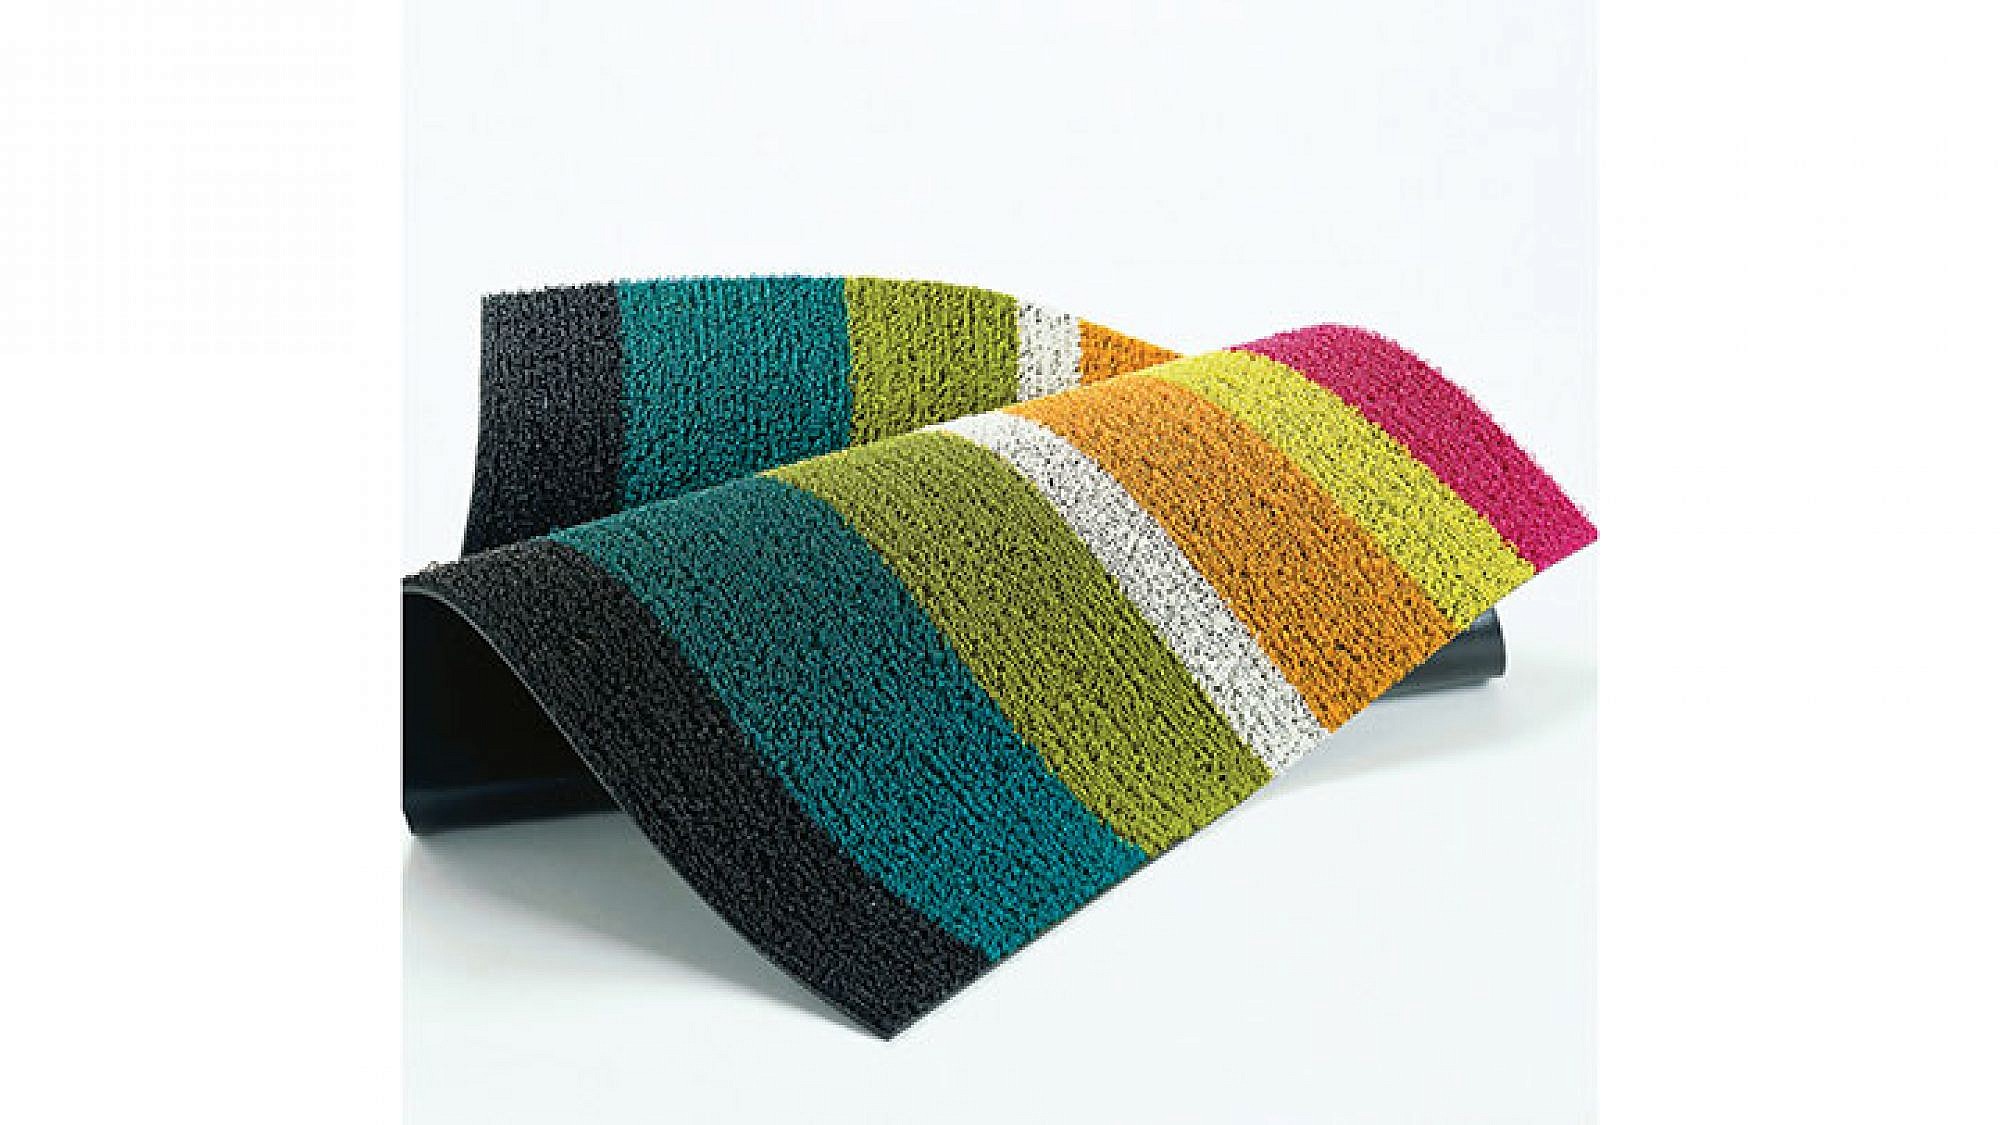 שטיח בעיצוב סנדי צ'ילוויץ, 490 שקלים. להשיג בהביטאט | צילום: יח"צ